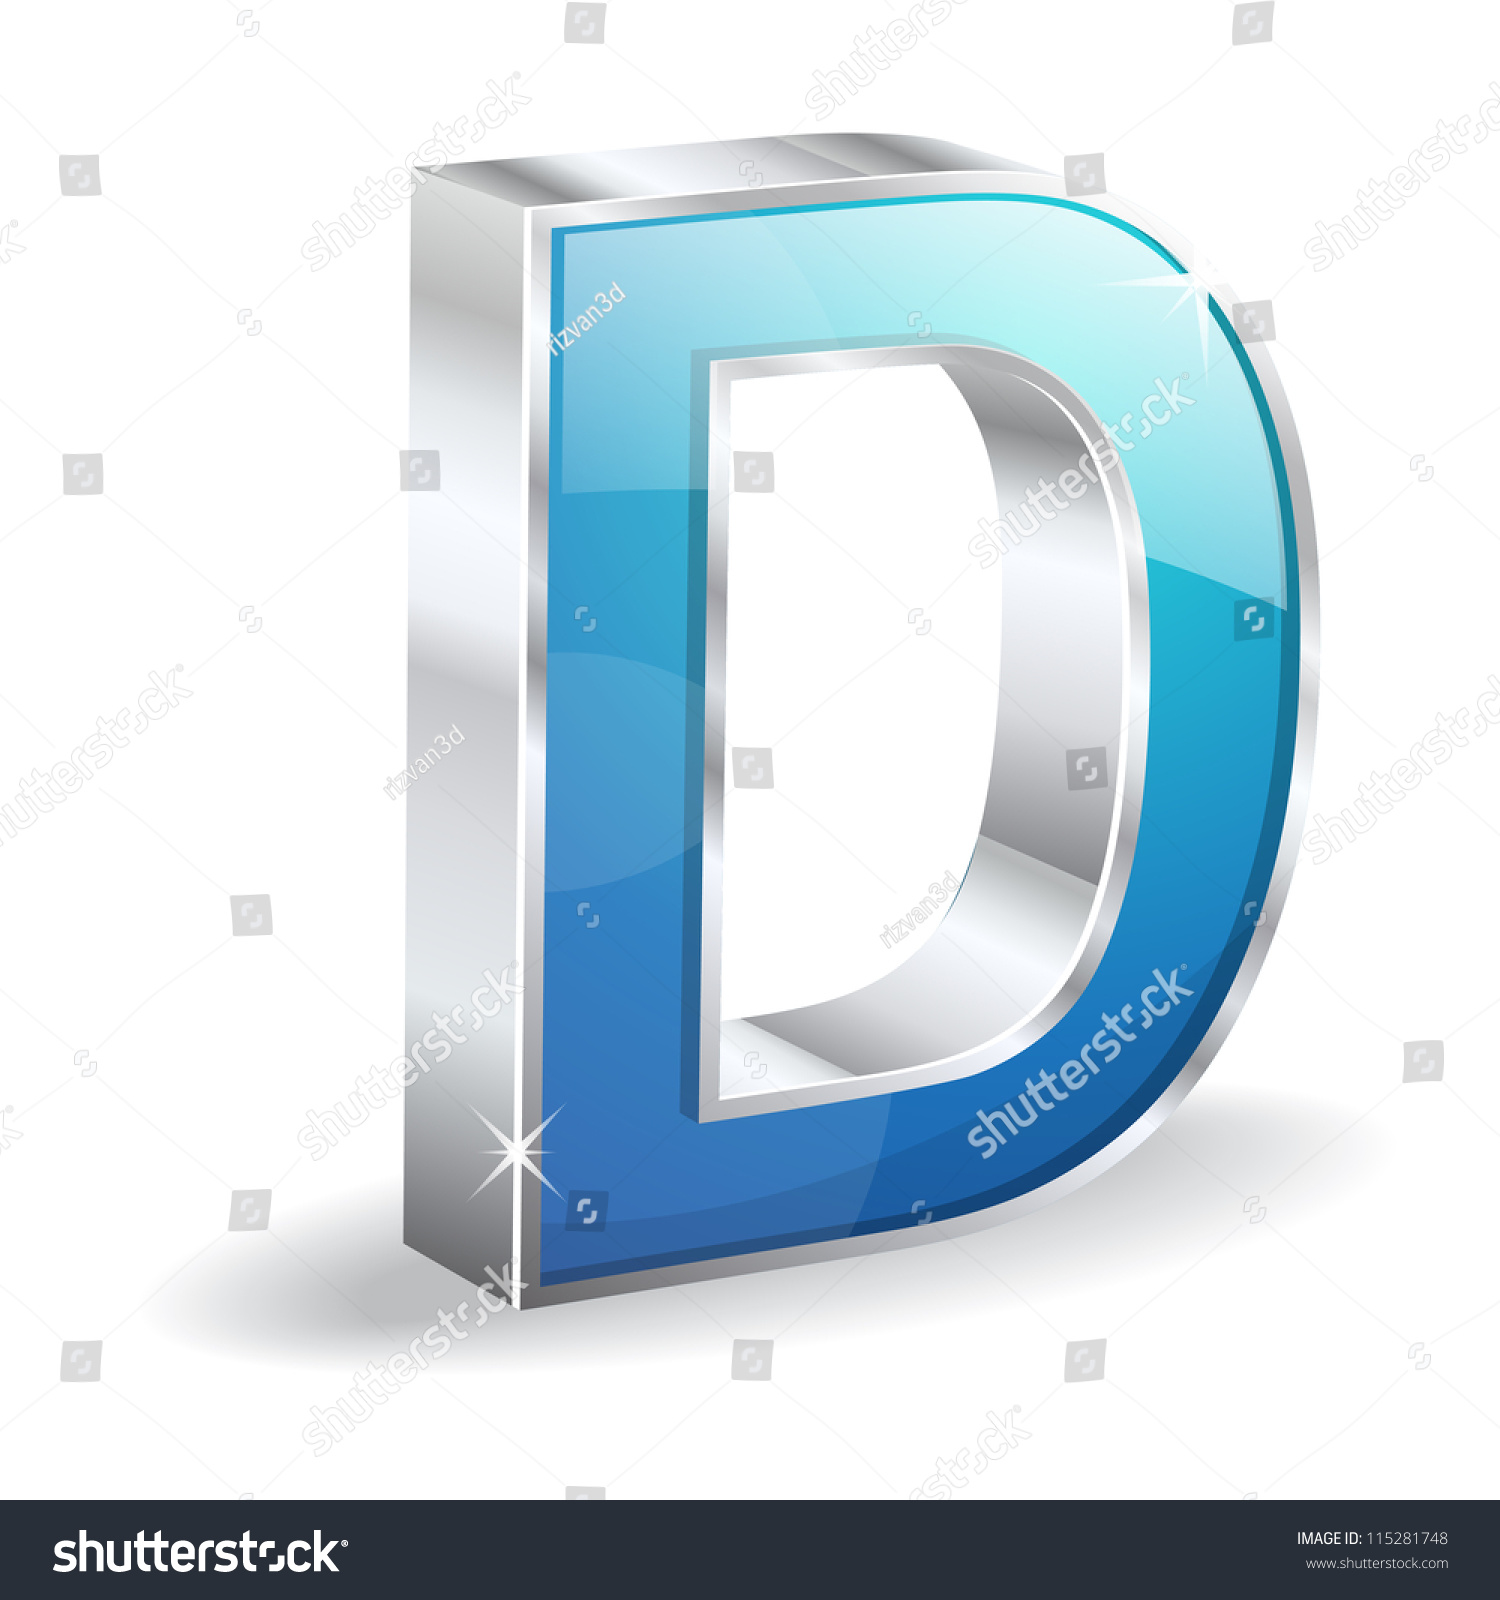 3d Glossy Alphabet D Letter Vector Character - 115281748 : Shutterstock